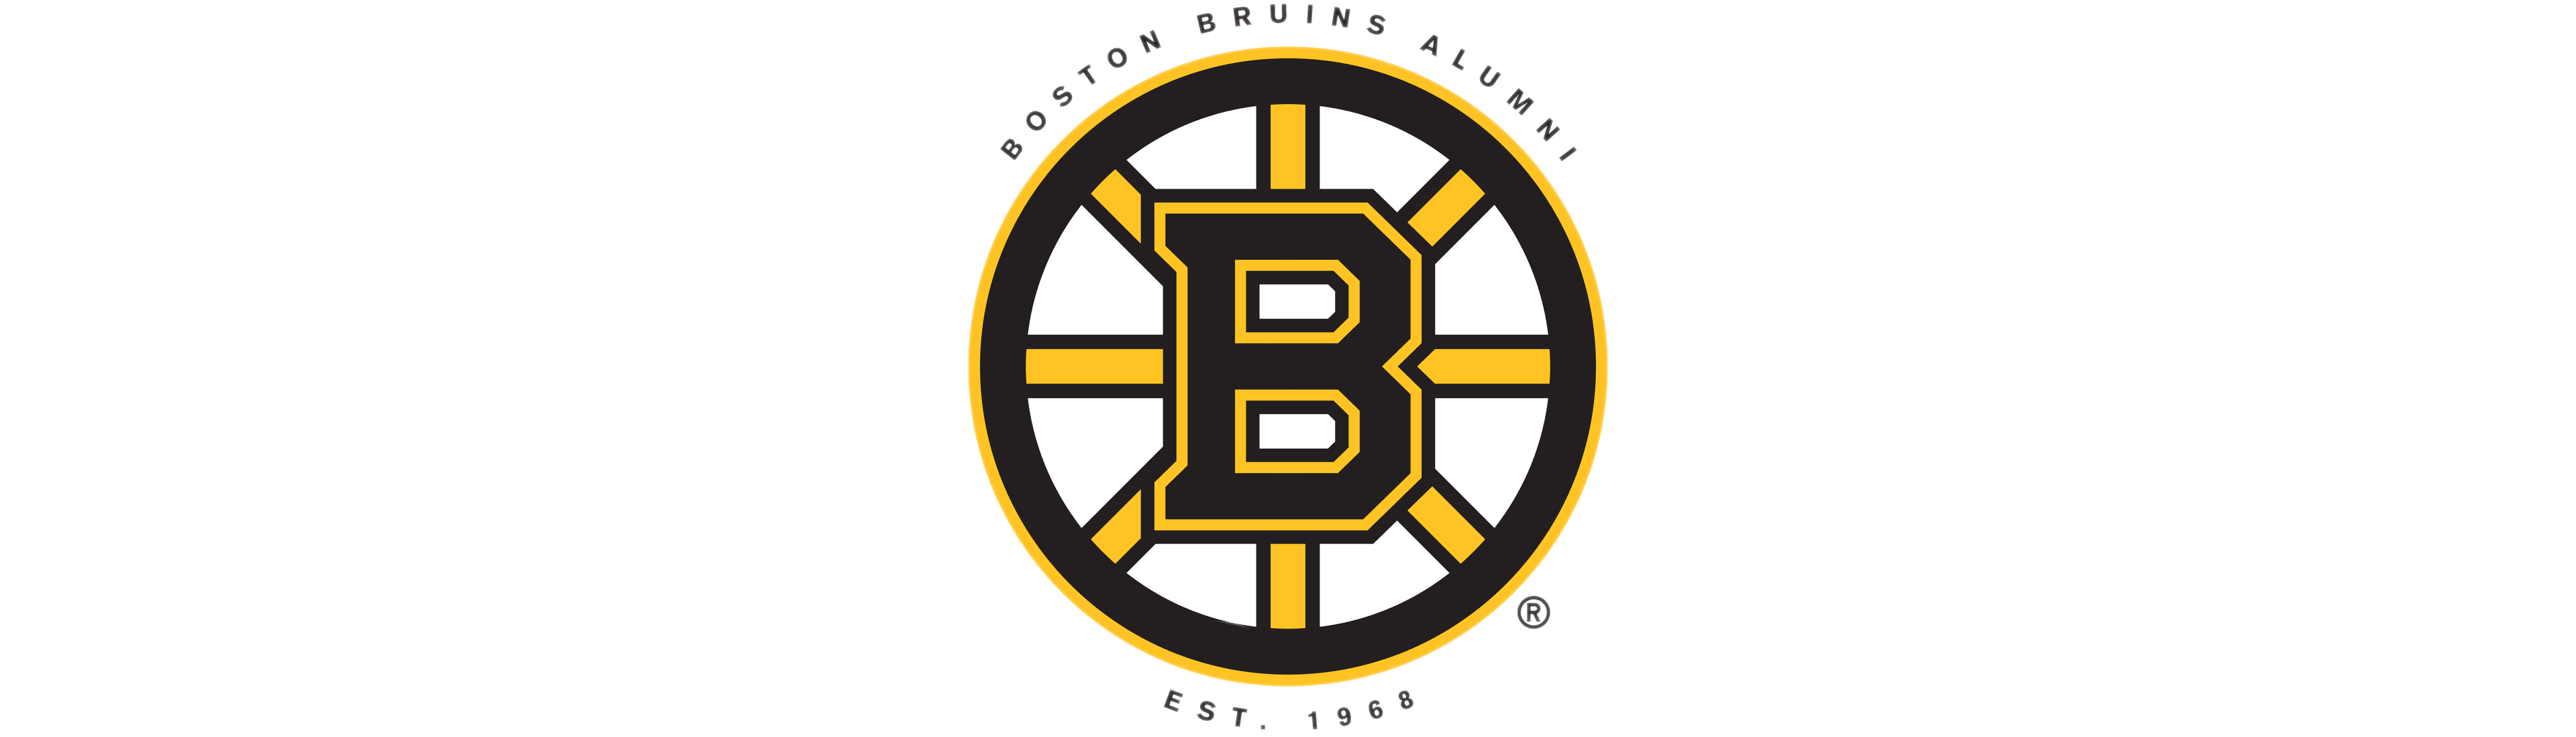 Bruins Alumni vs. Light Foundation 12/17 logo image